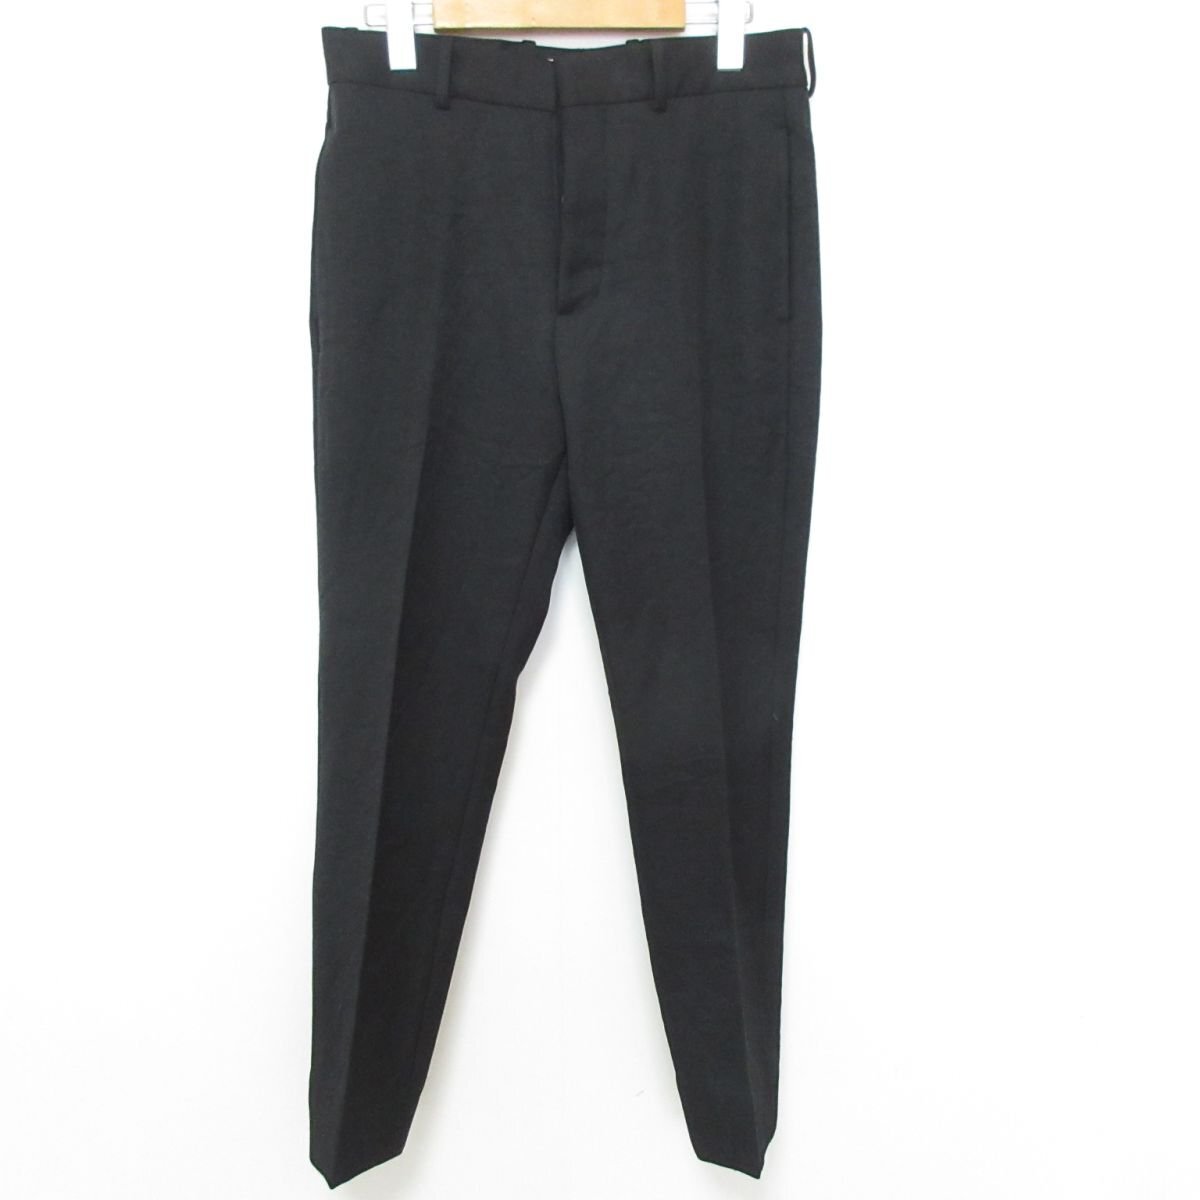  beautiful goods 19SS MARNI Marni center Press stretch tapered pants slacks pants size 44 black 